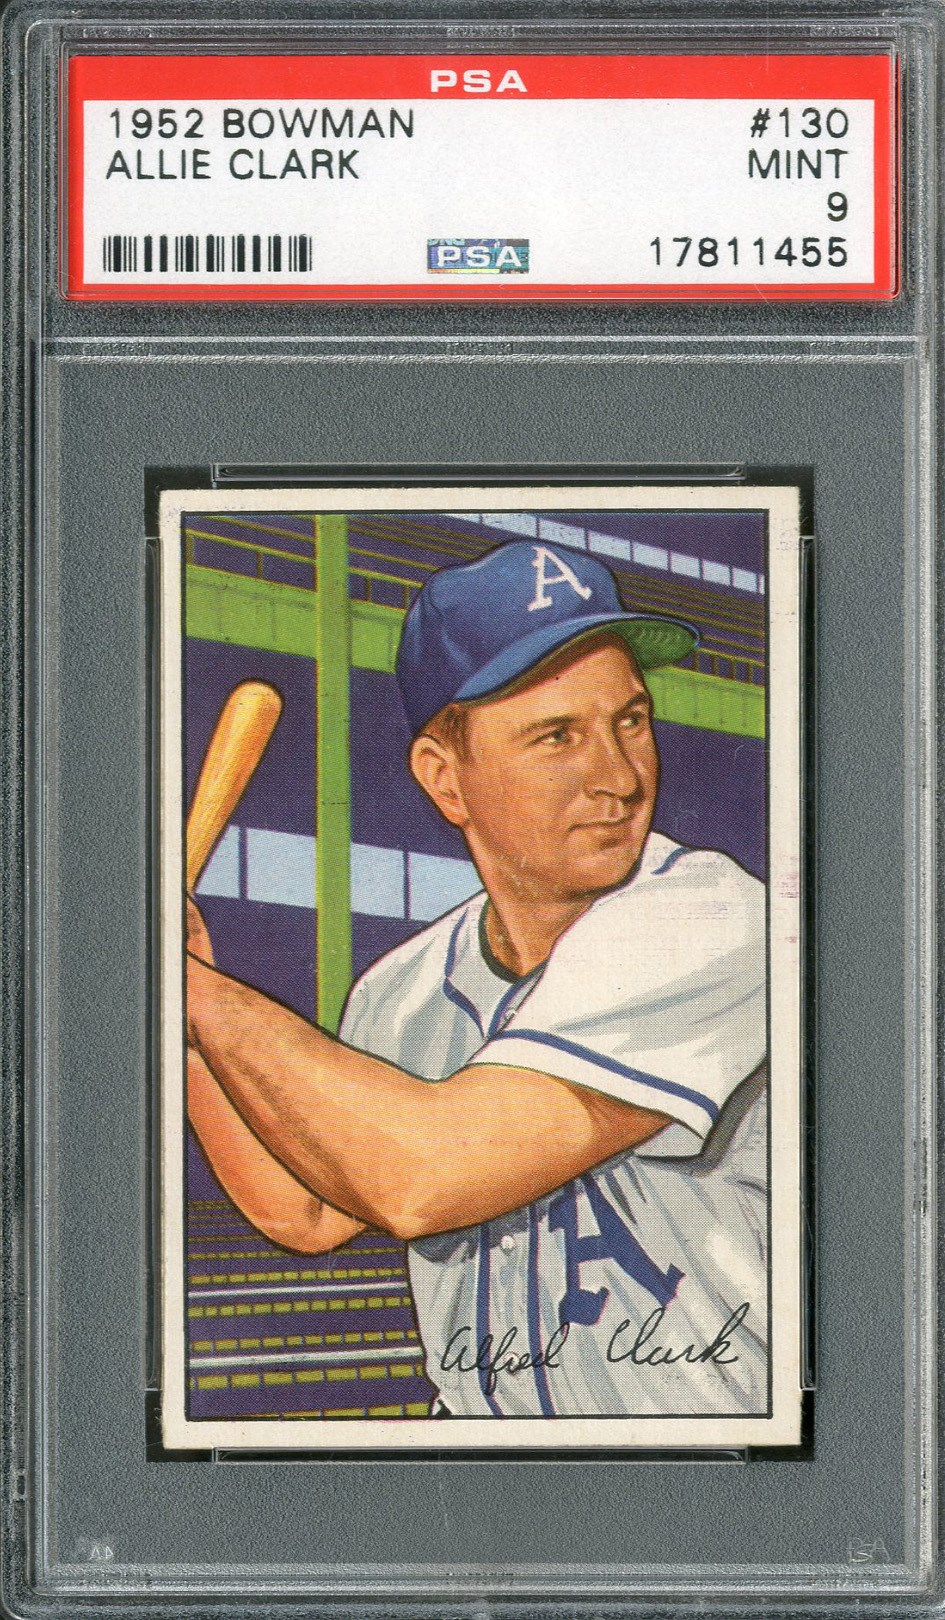 Baseball and Trading Cards - 1952 Bowman #130 Allie Clark PSA MINT 9